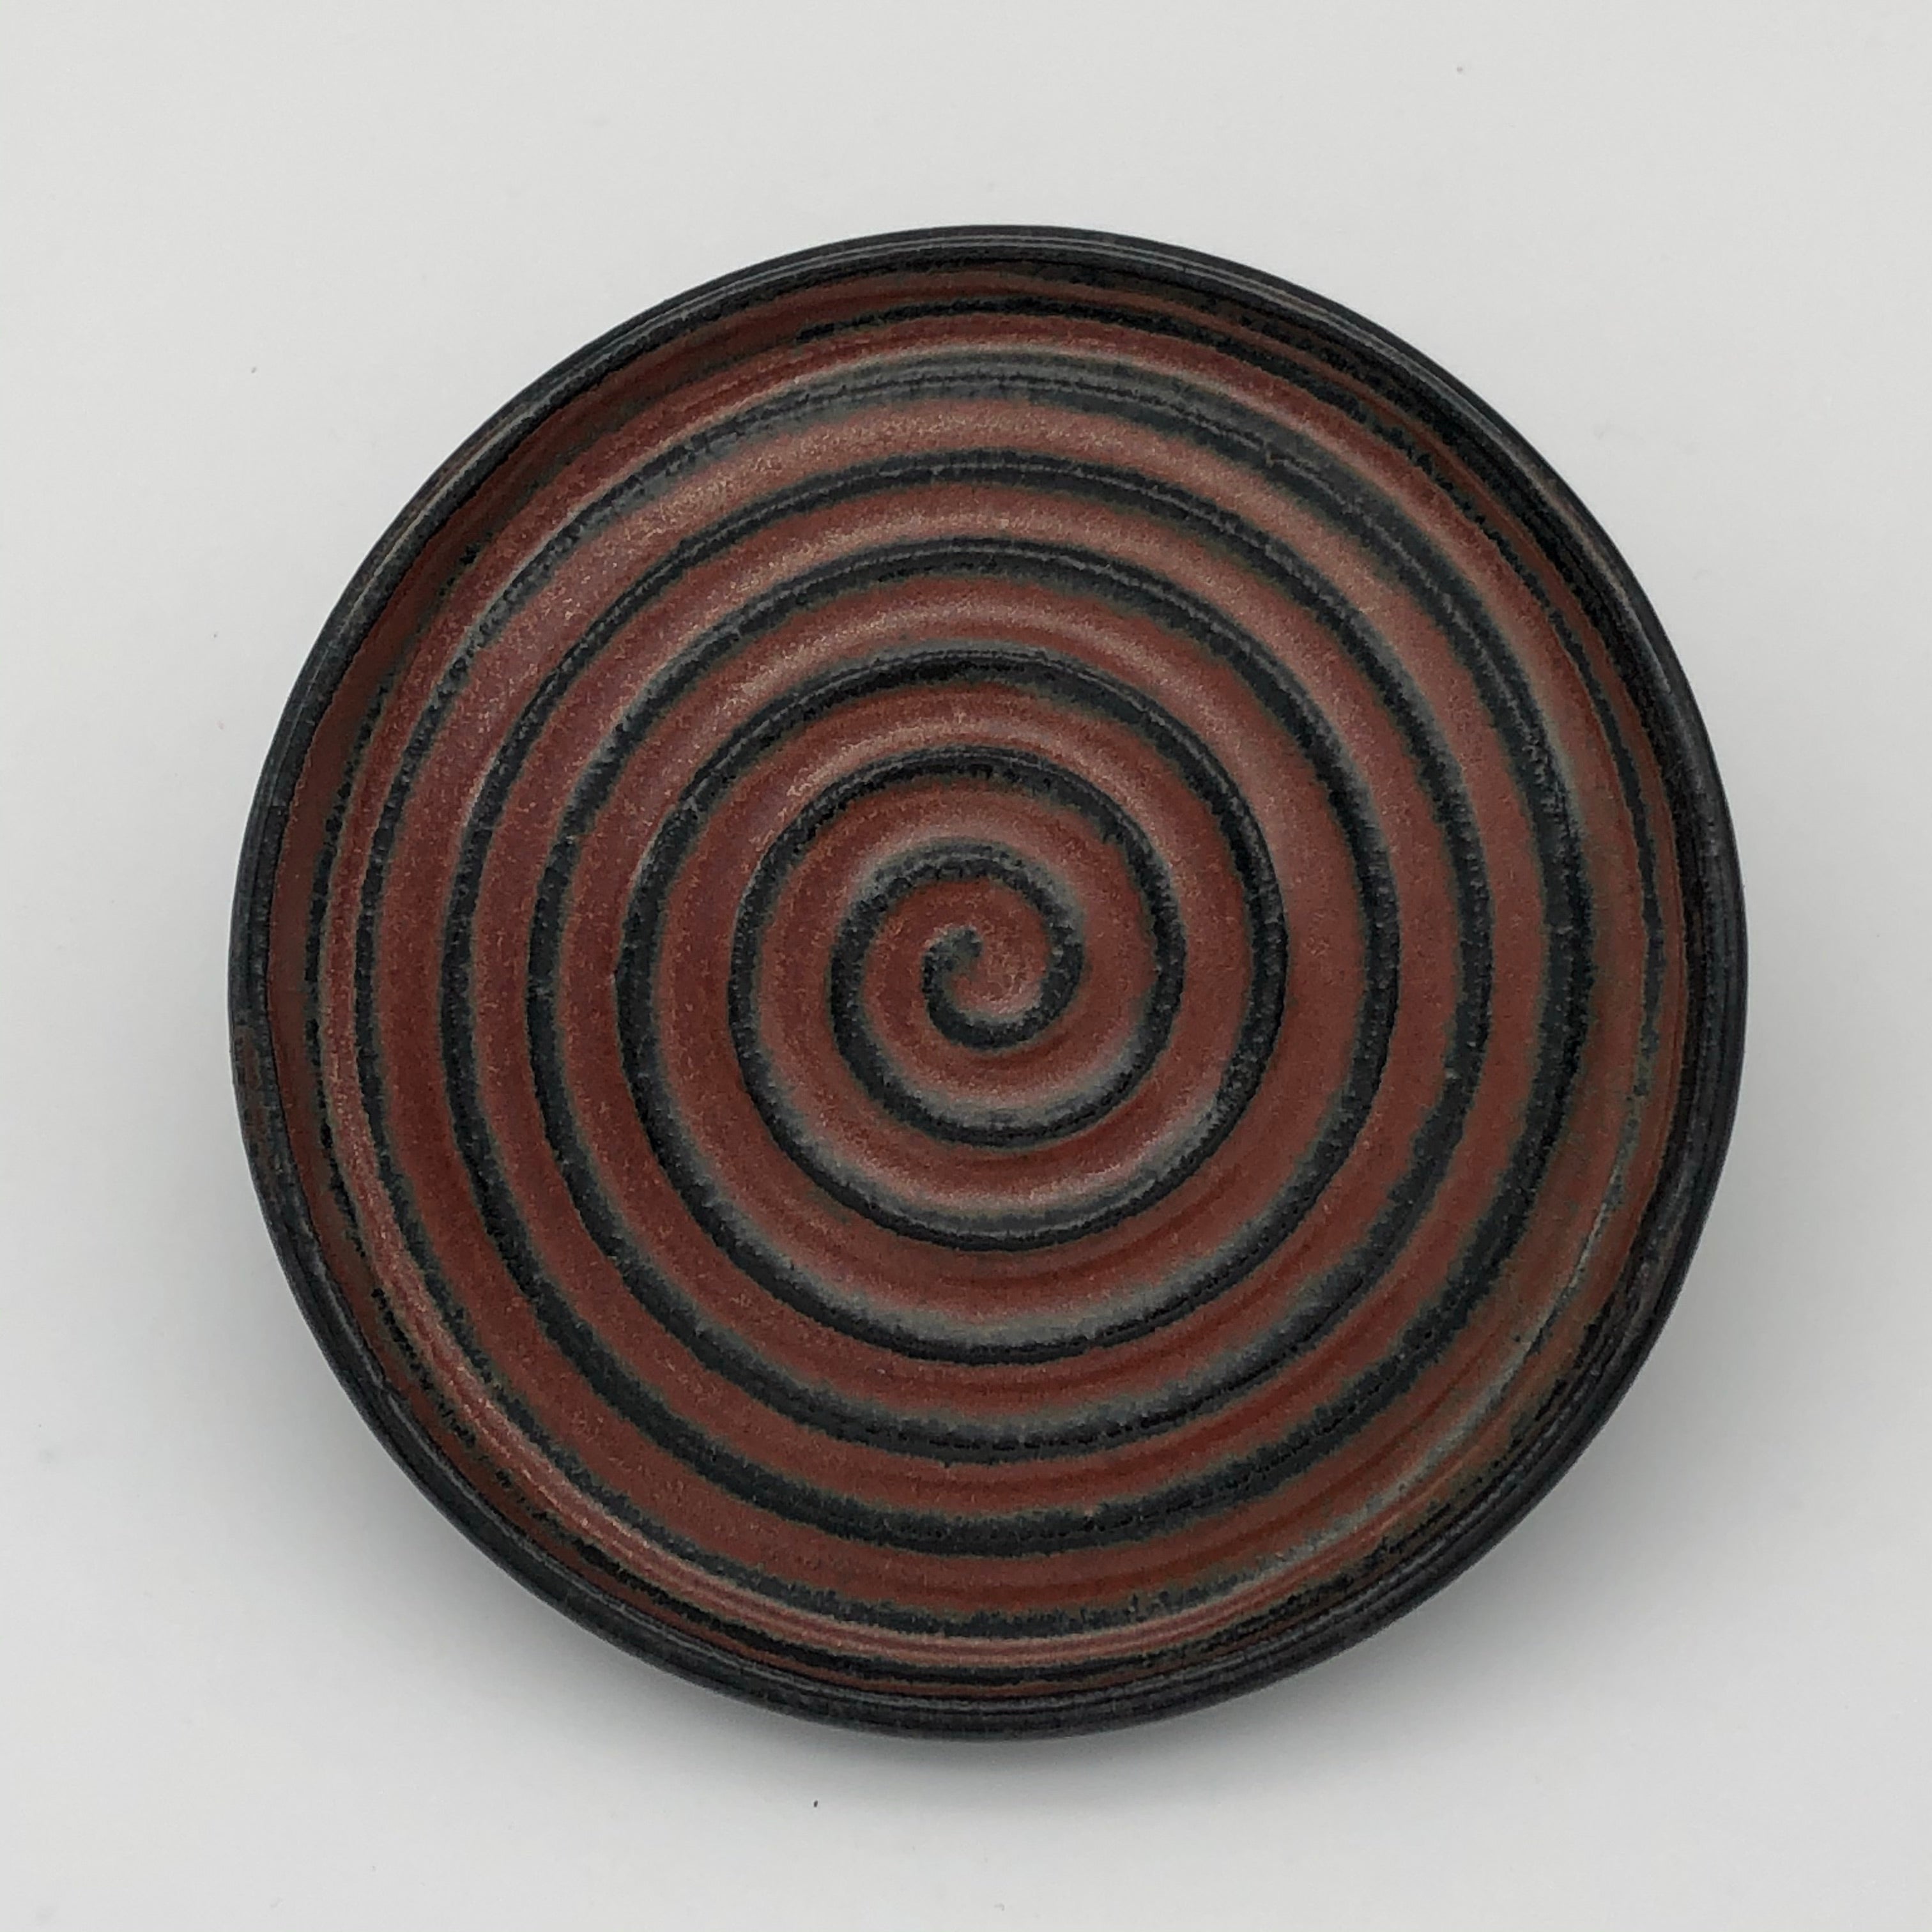 Small Plates in Brown Stoneware